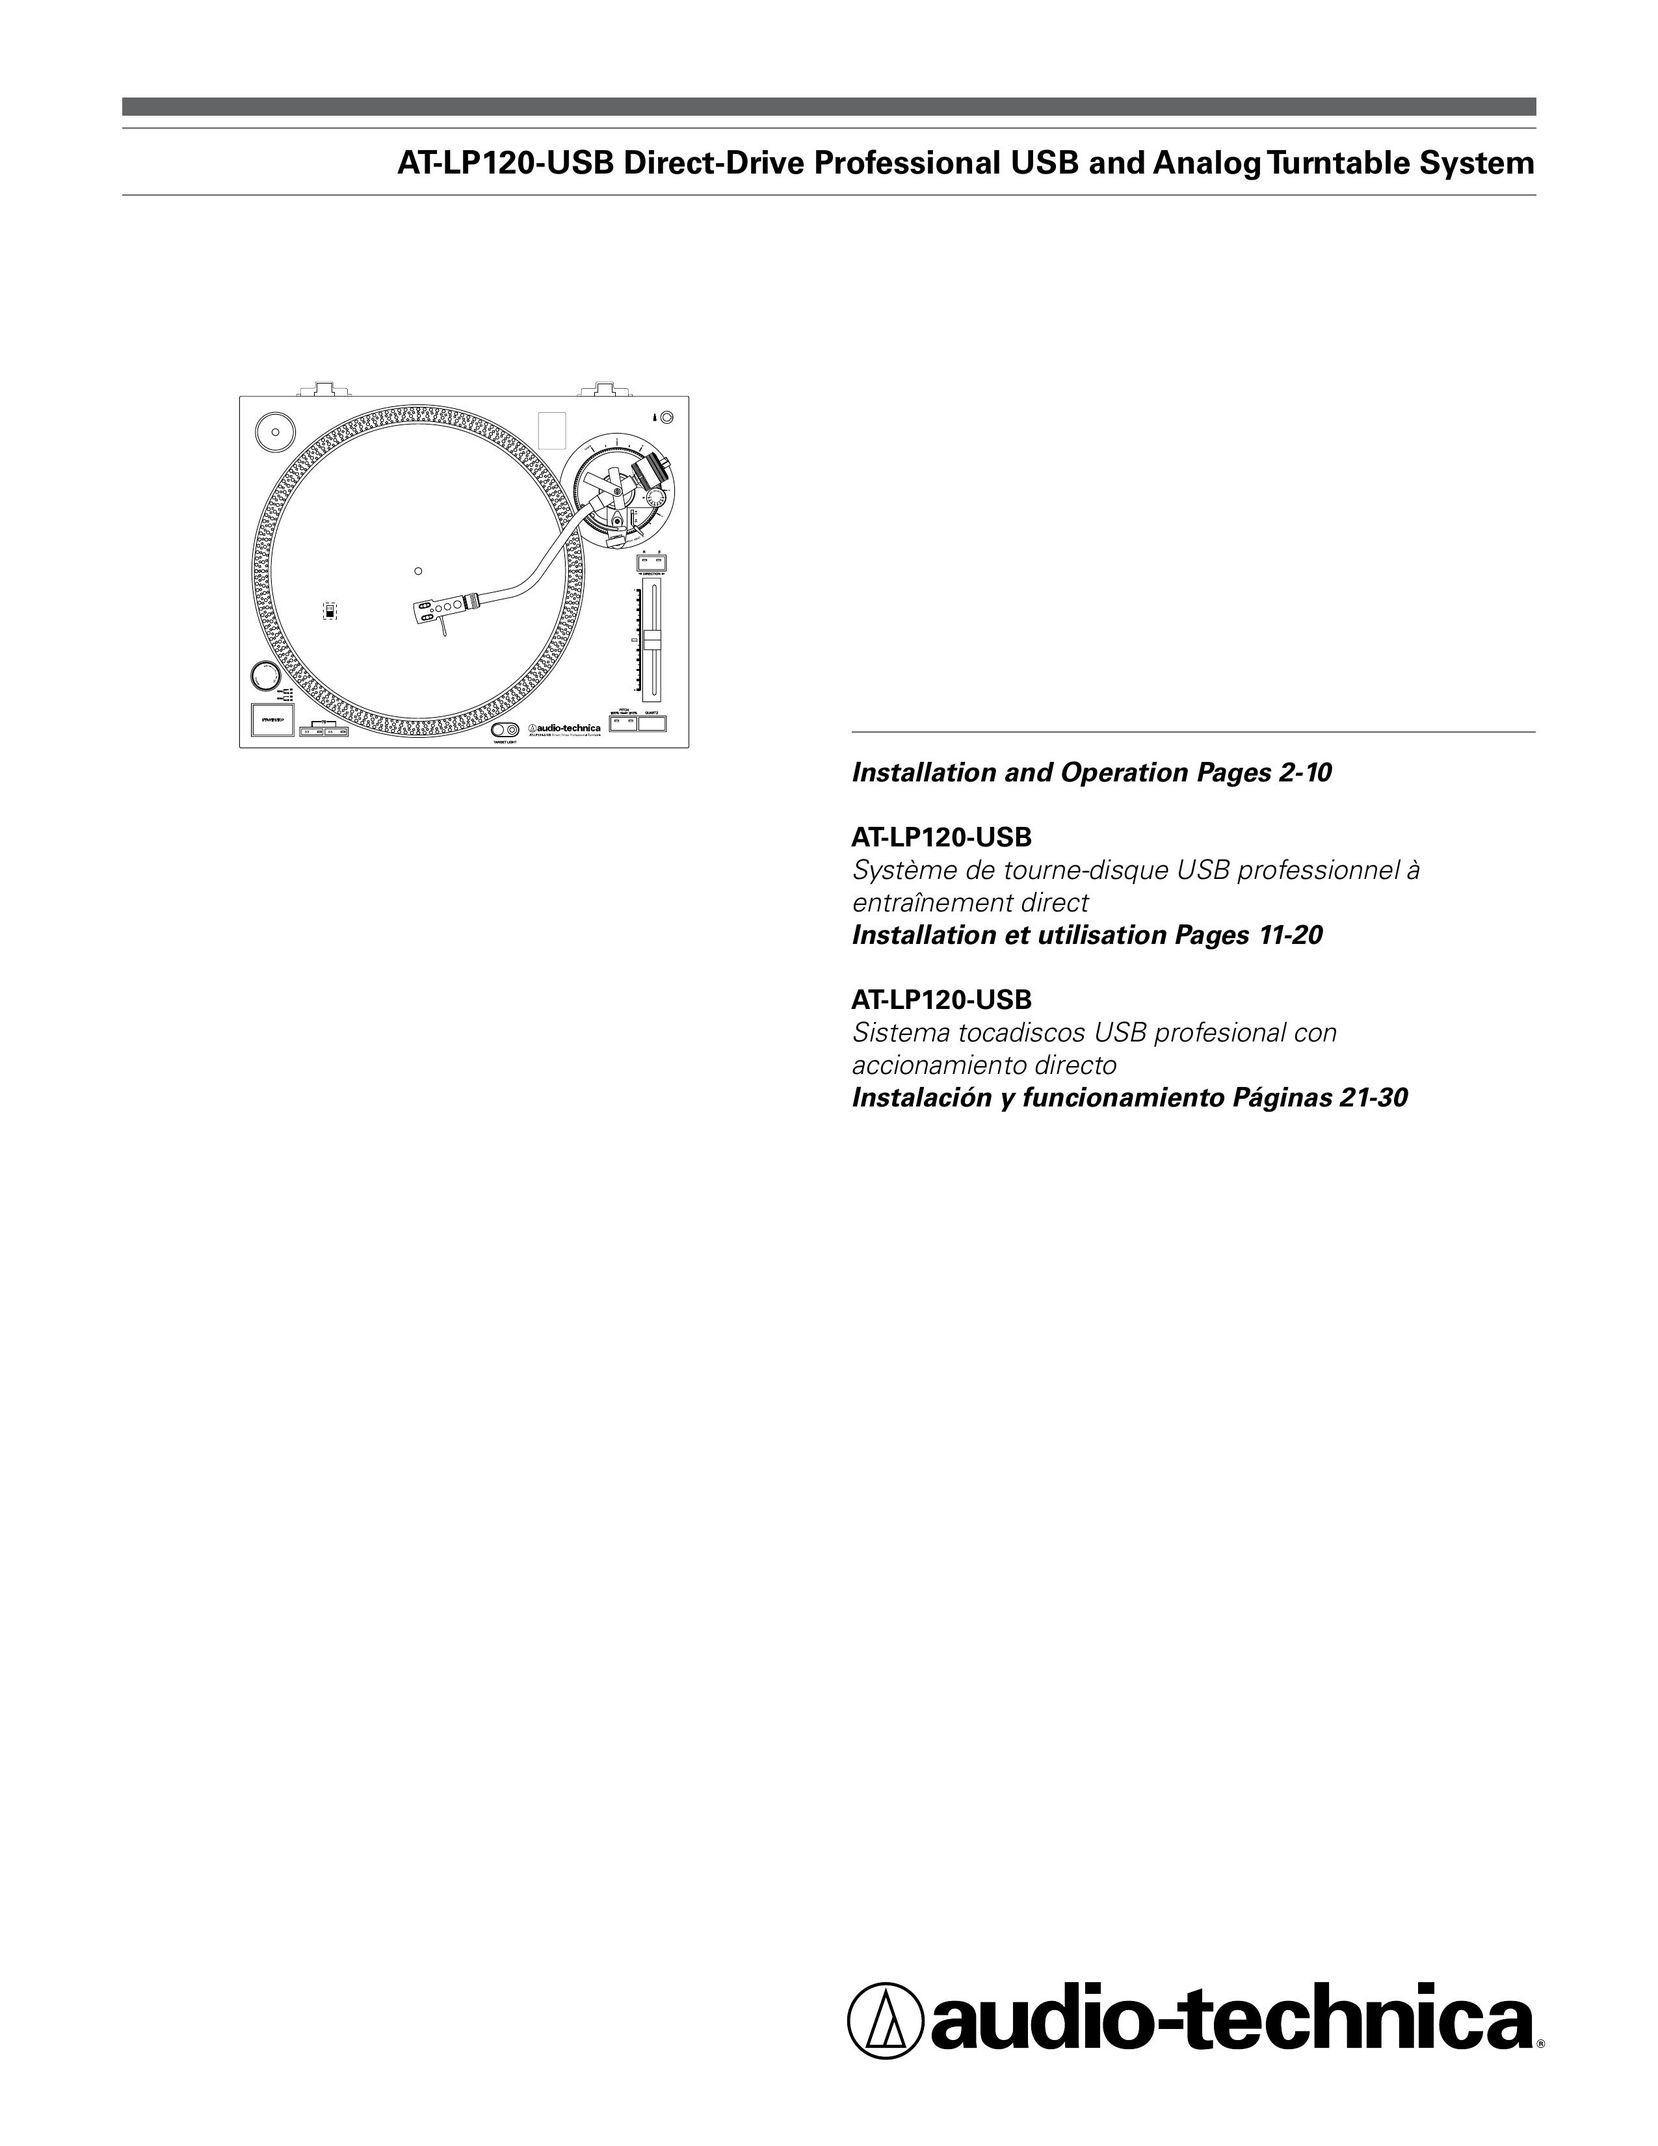 Audio-Technica AT-LP120-USB Turntable User Manual